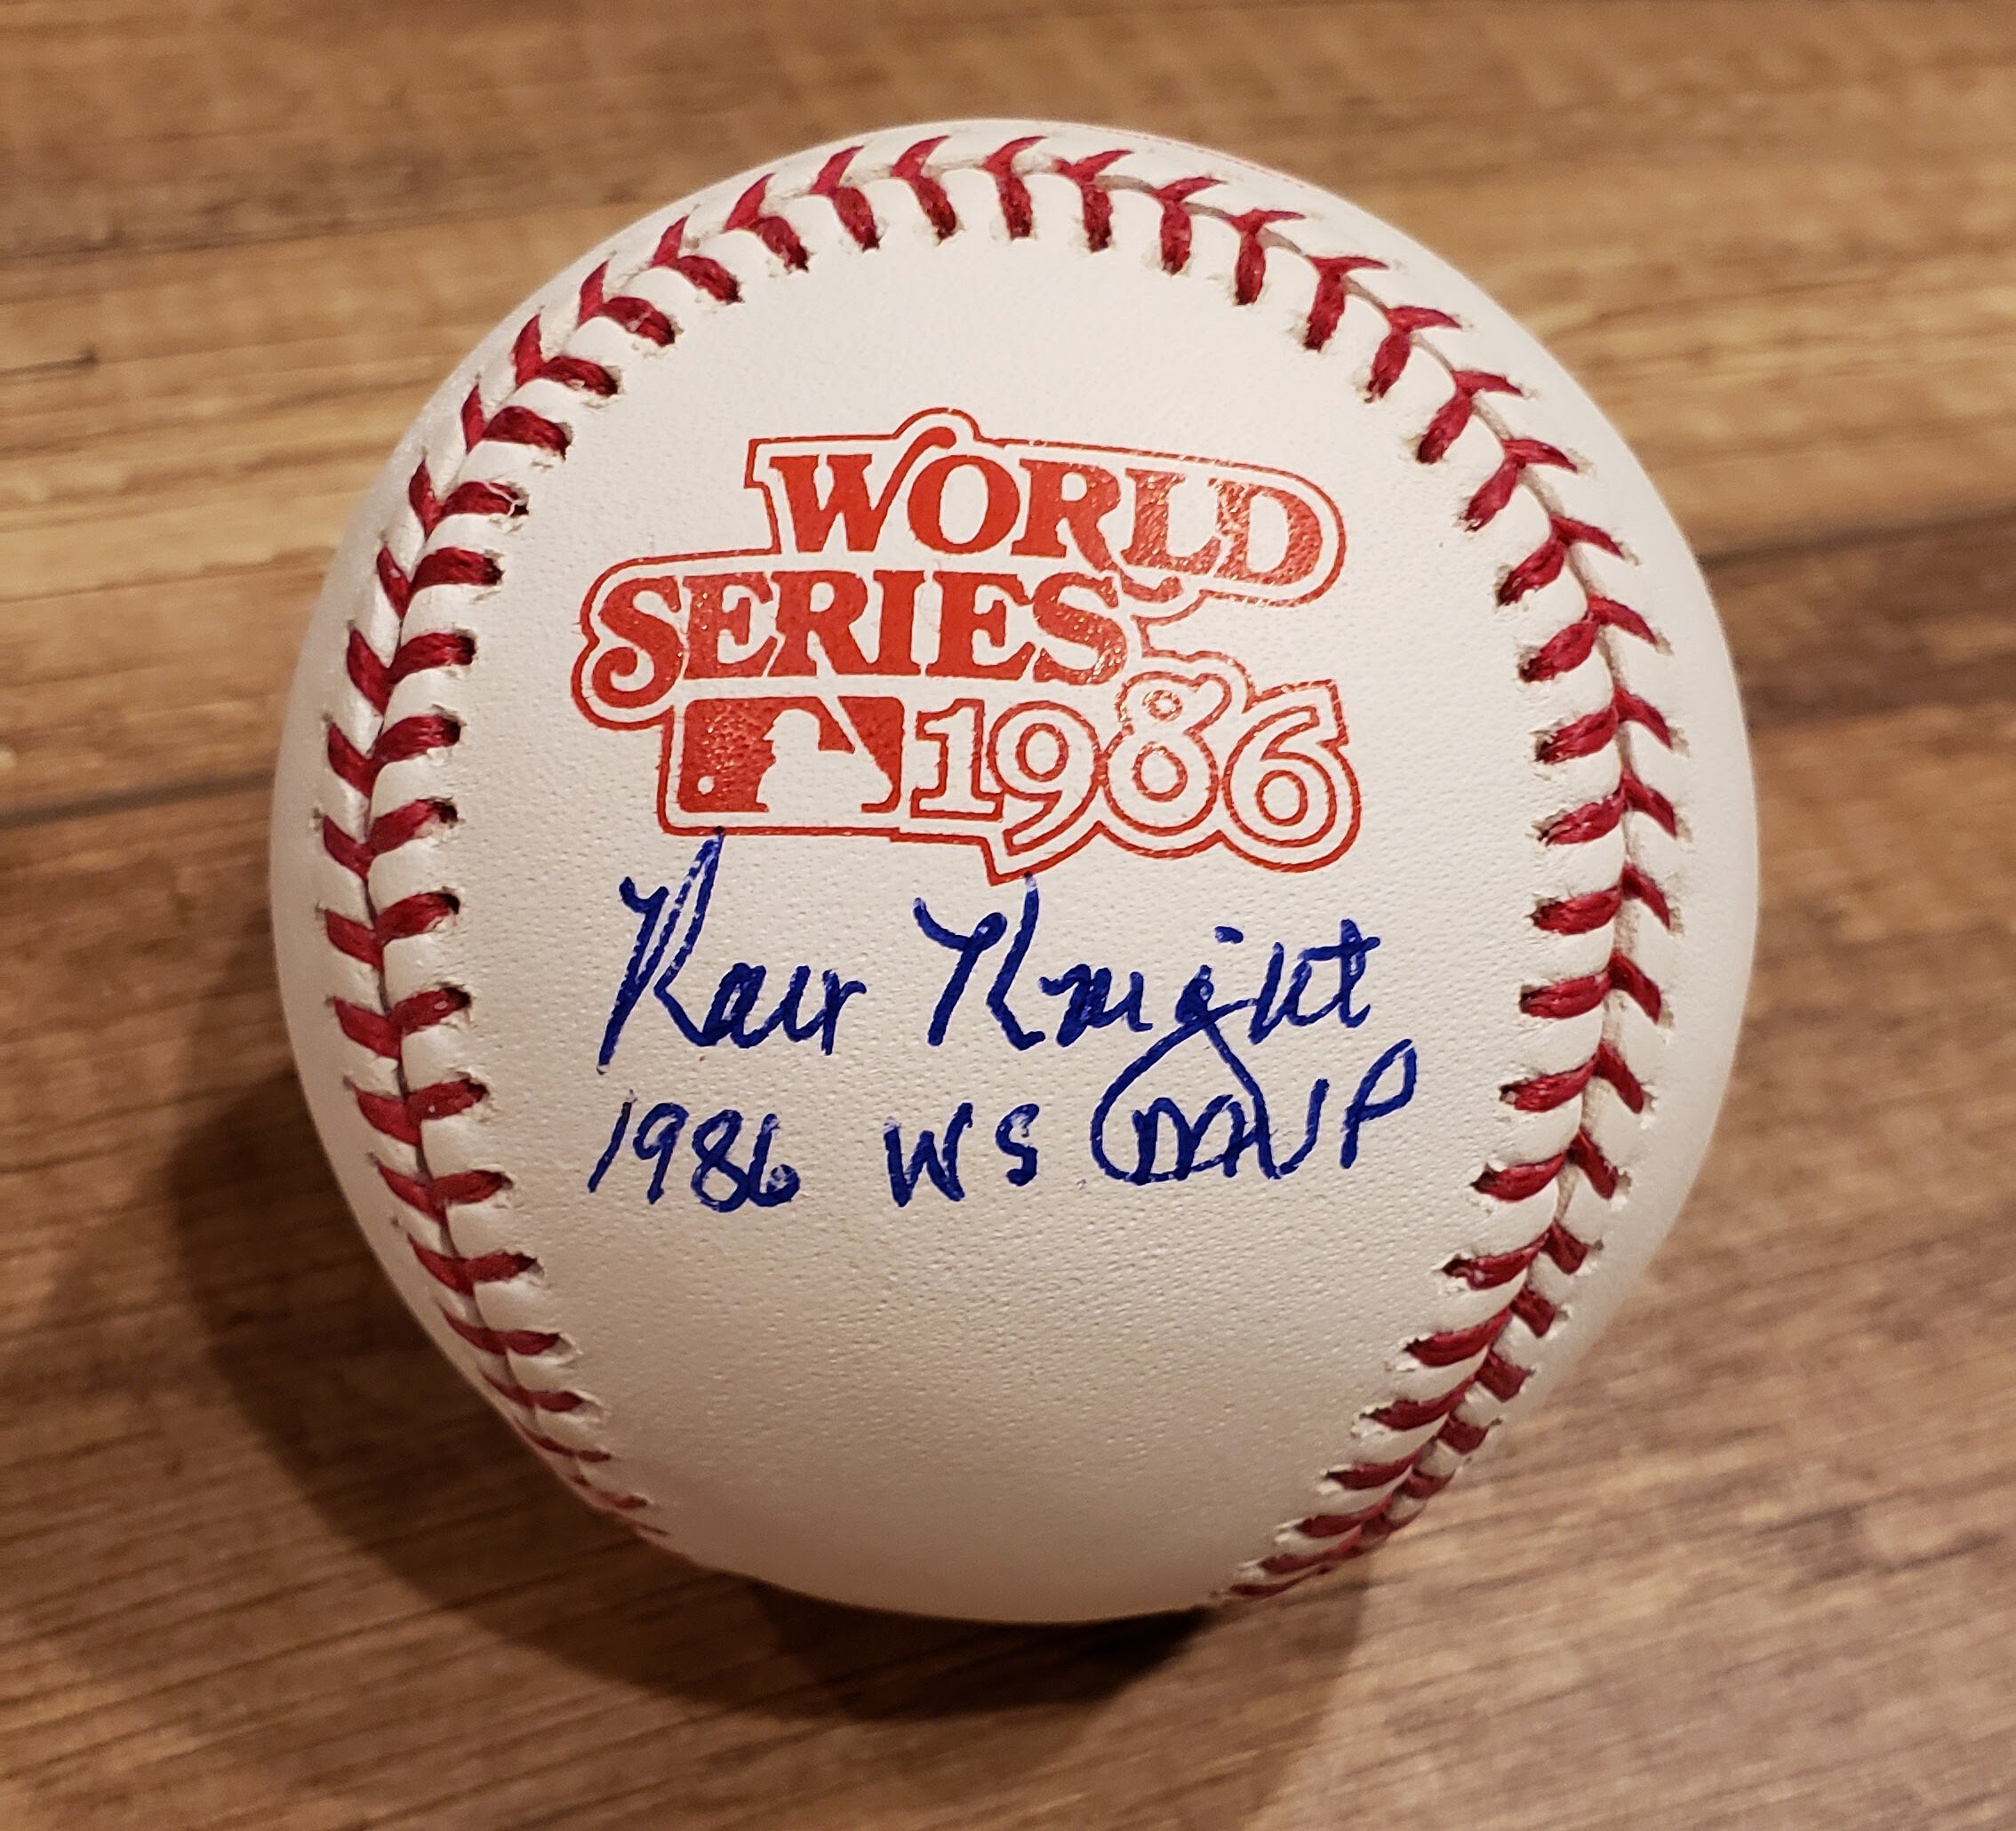 Ray Knight Signed Rawlings 1986 World Series New York Mets Baseball w/1986 WS MVP 